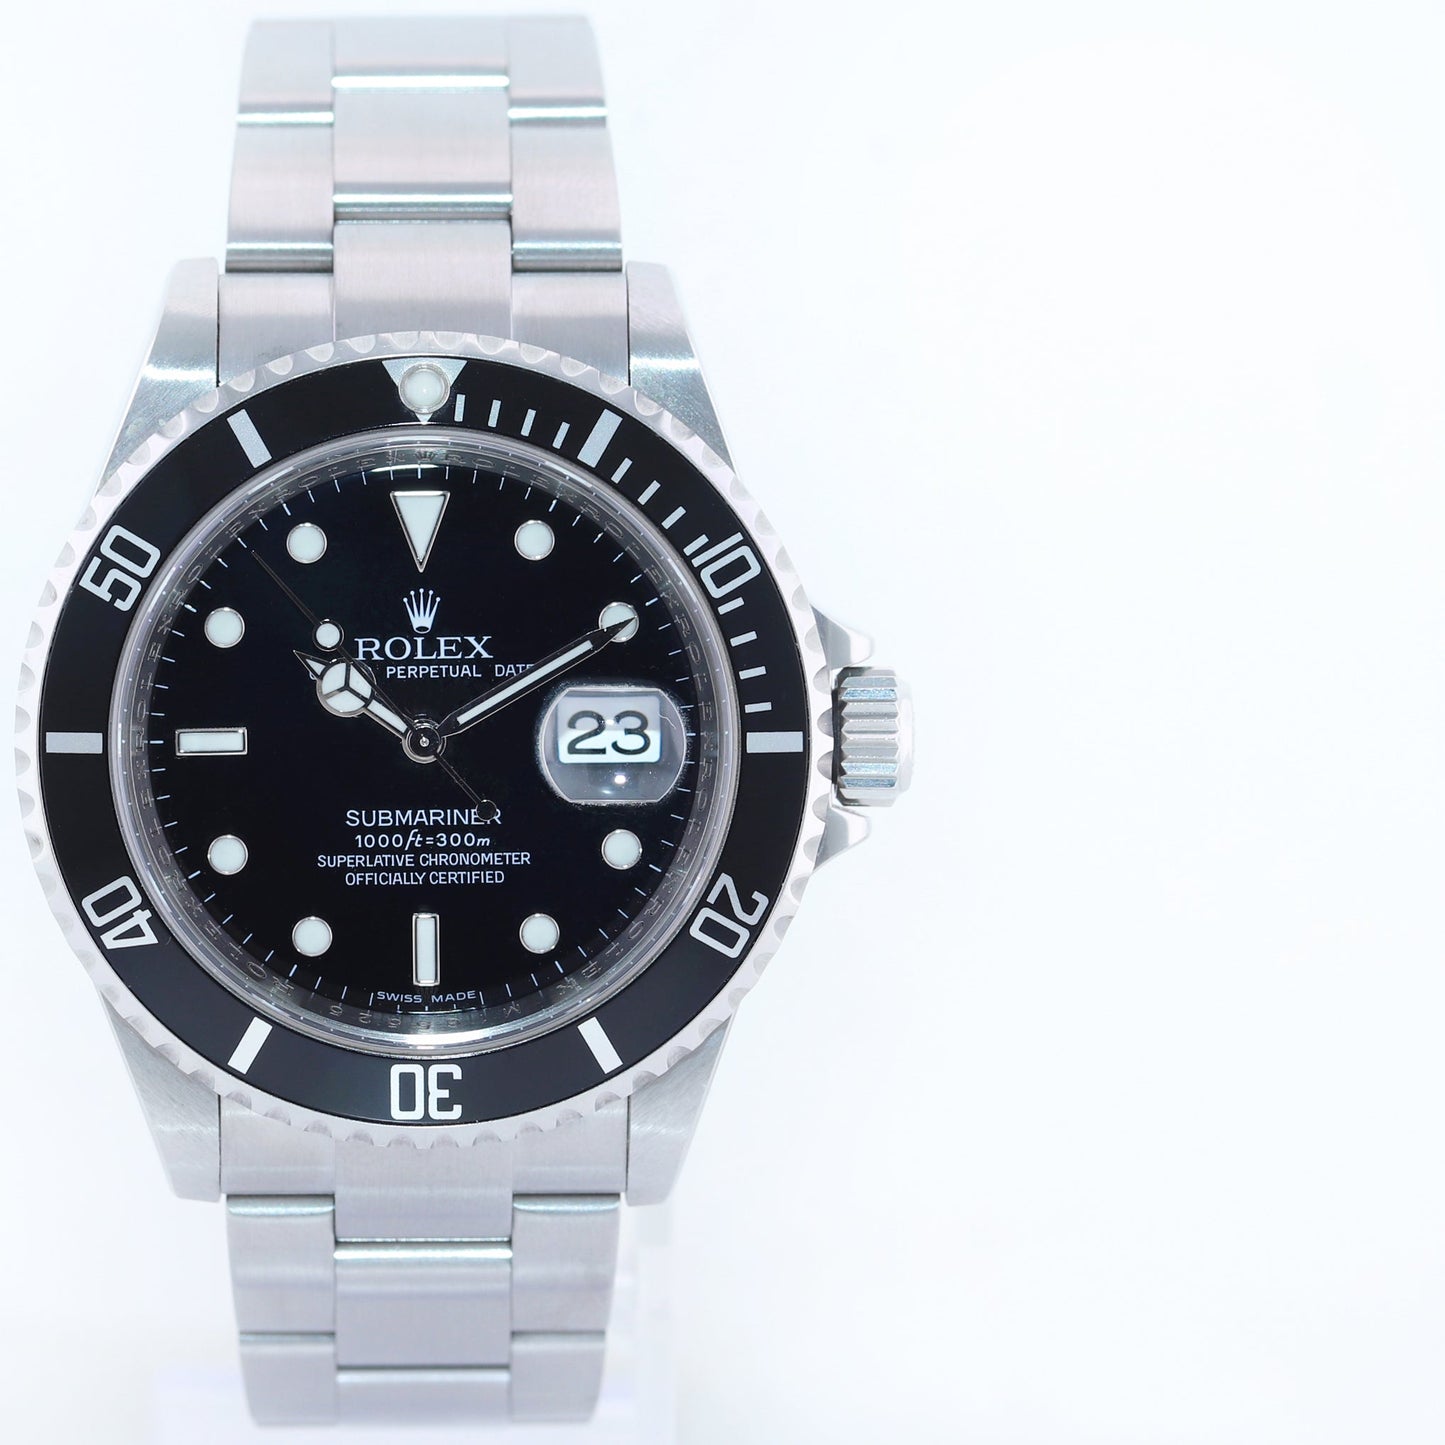 MINT PAPERS 2008 Rolex Submariner Date 16610 Steel Black Rehaut Watch Box